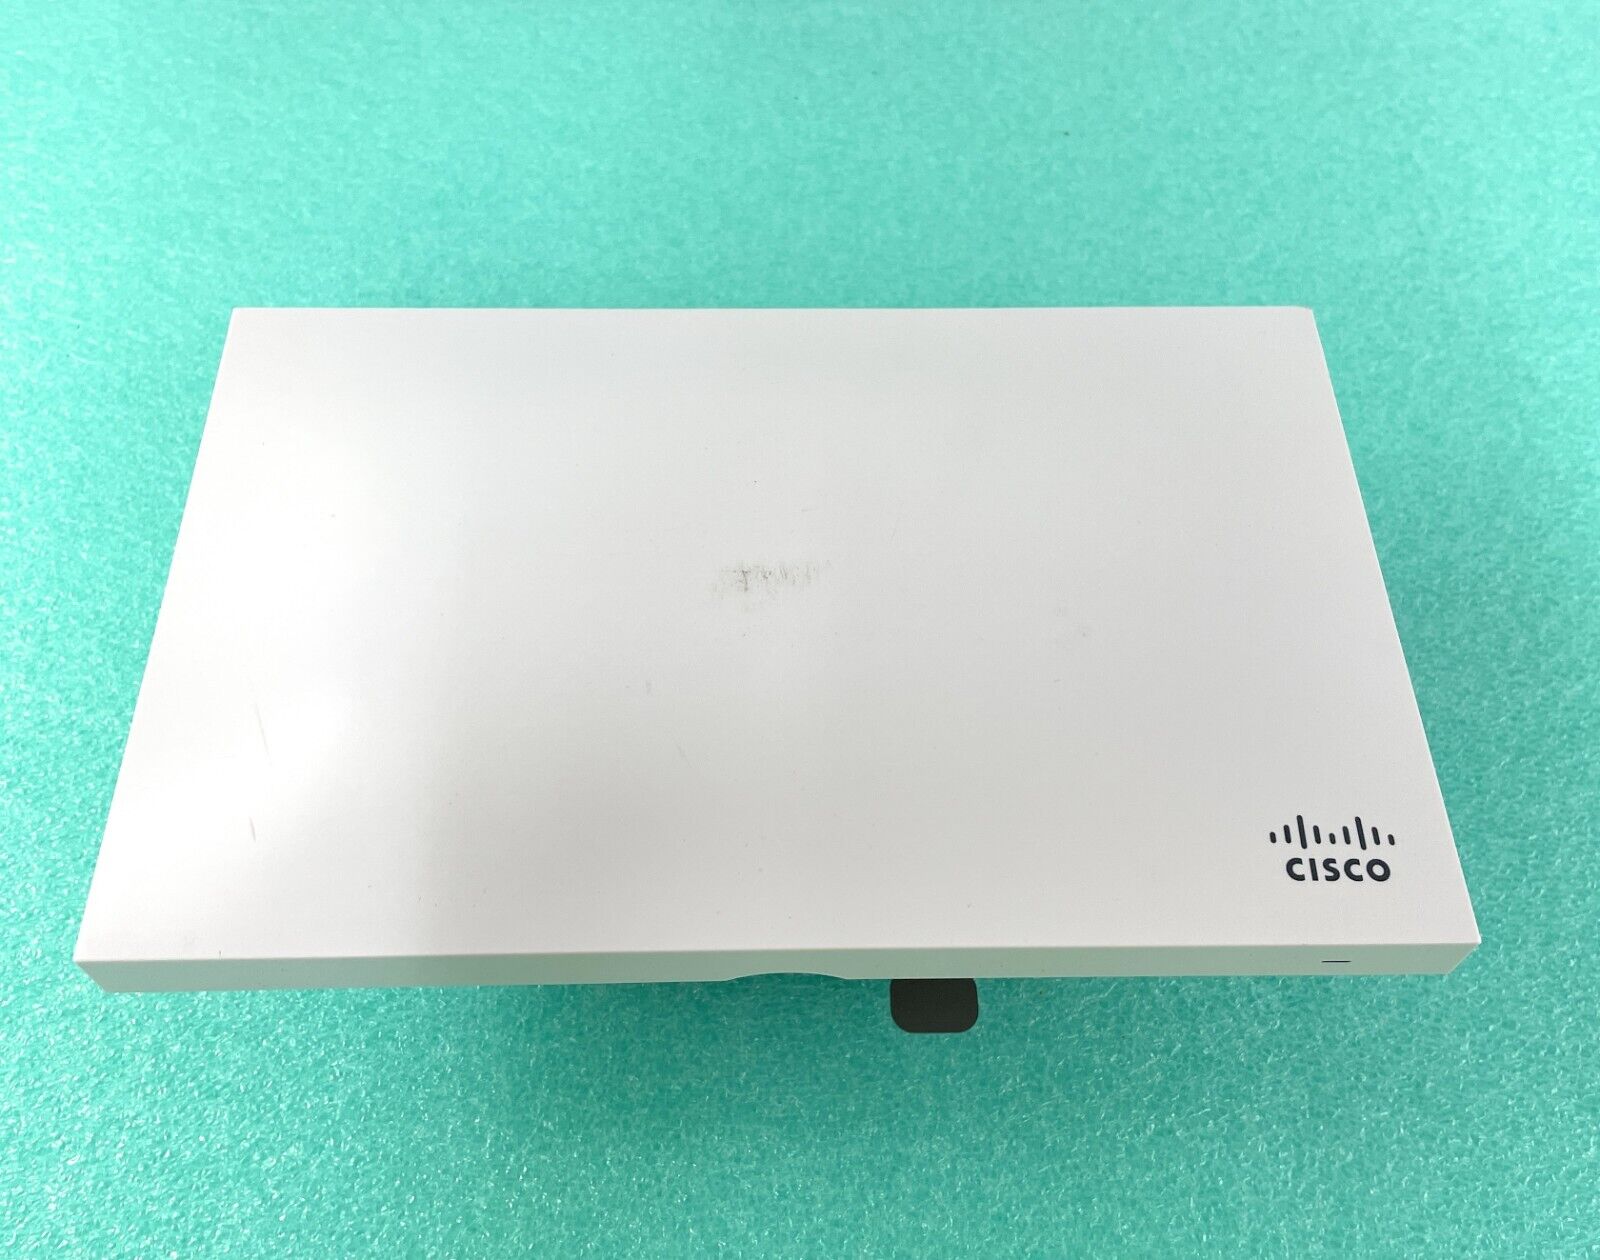 Cisco Meraki MR74 802.11ac Cloud Managed Wireless Access Point - No Antennas